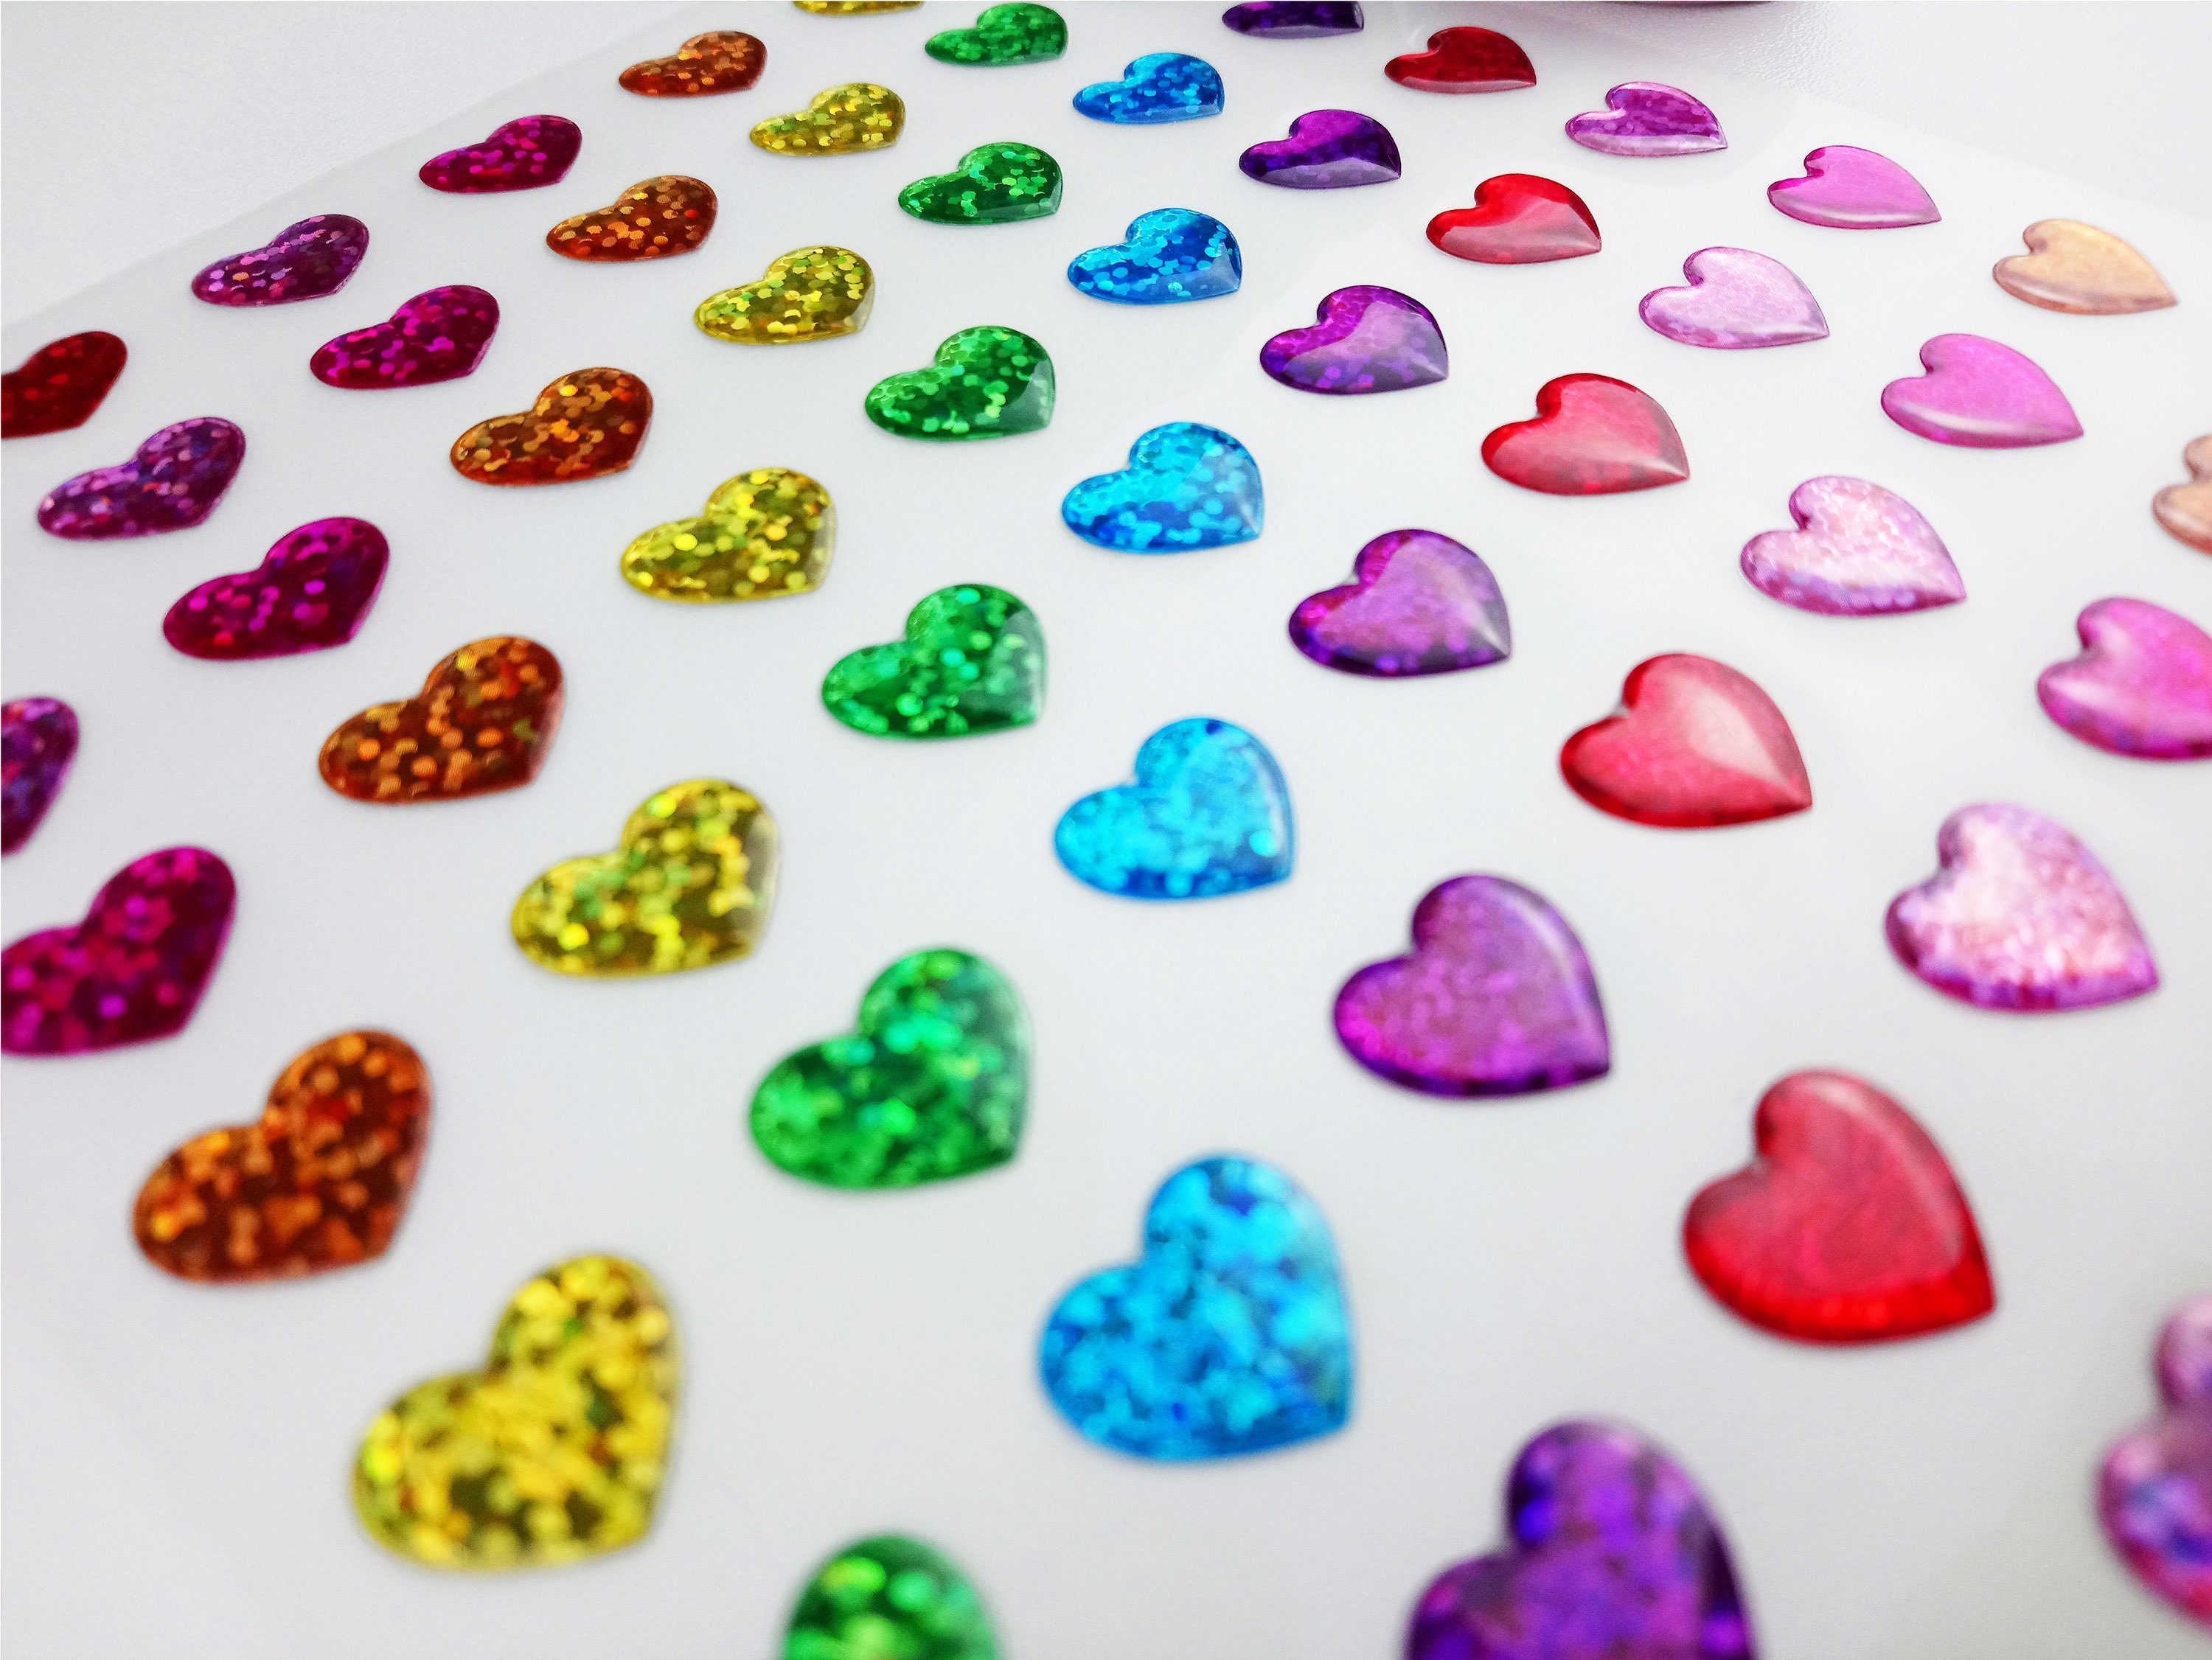 American Crafts Pastel Glitter Heart Stickers